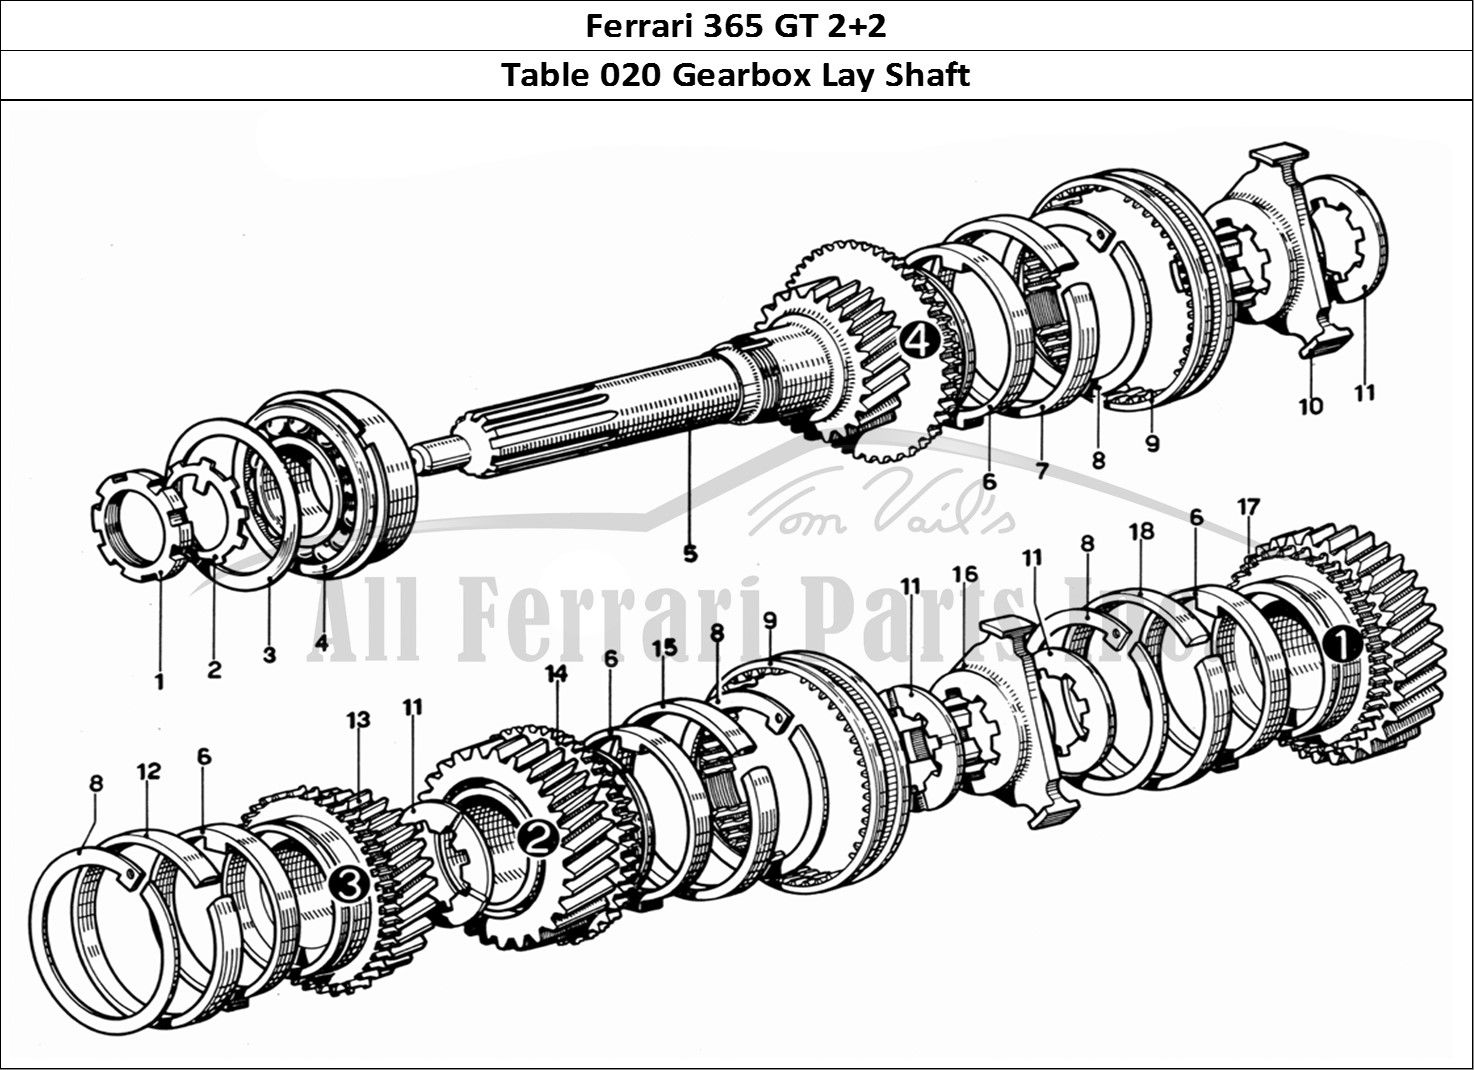 Ferrari Parts Ferrari 365 GT 2+2 (Mechanical) Page 020 Lay Shaft